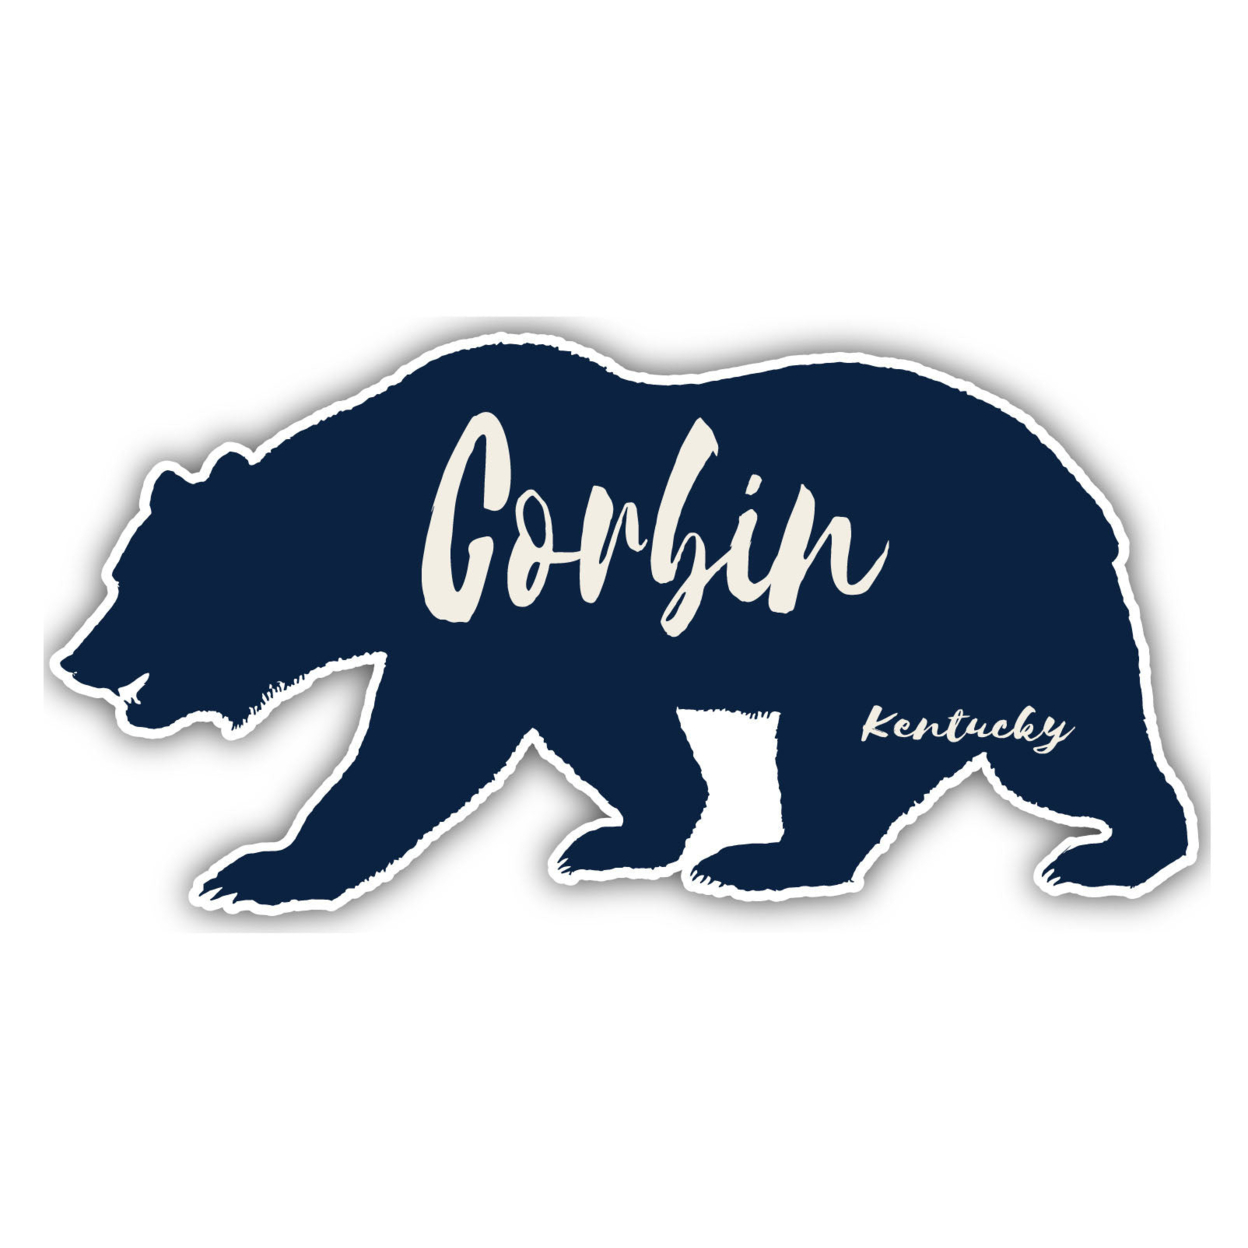 Corbin Kentucky Souvenir Decorative Stickers (Choose Theme And Size) - 4-Pack, 10-Inch, Bear